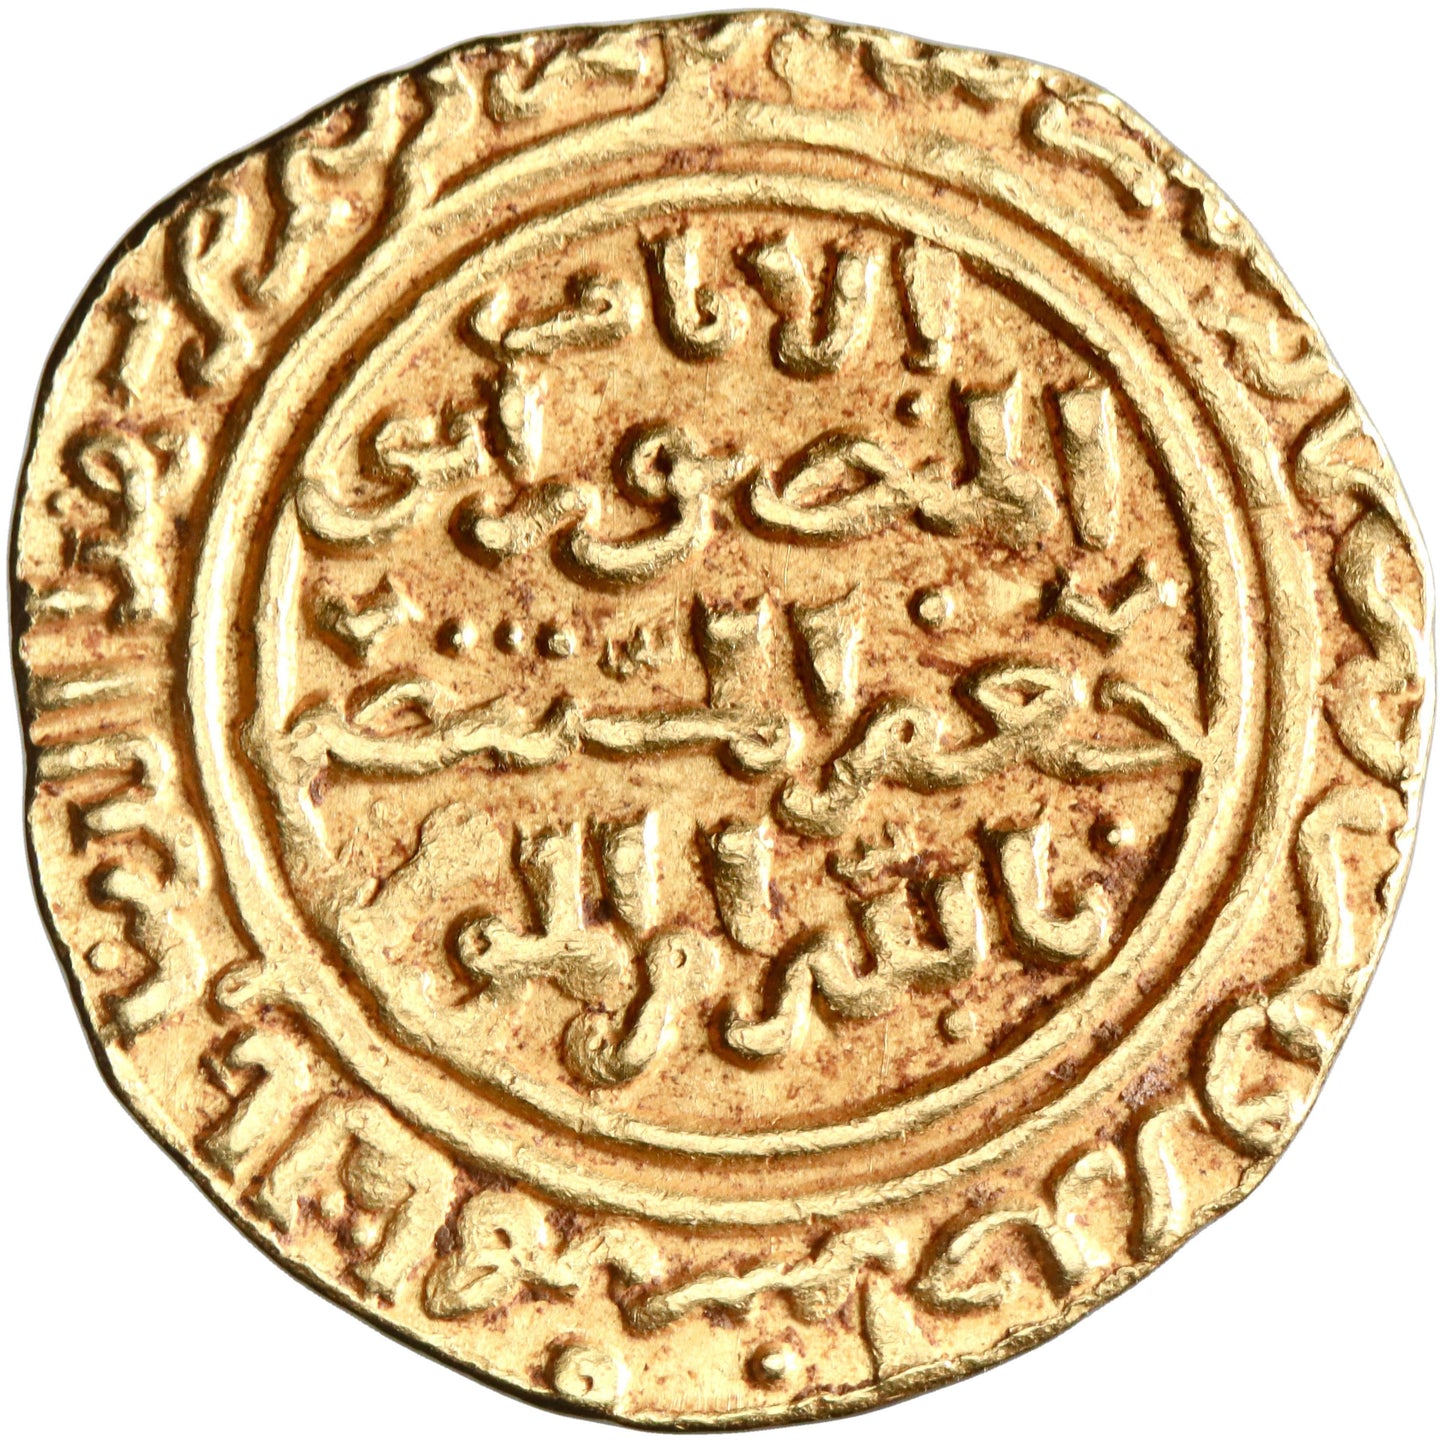 Ayyubid, al-Kamil I Muhammad, gold dinar, al-Qahira (Cairo) mint, AH 631, citing al-Mustansir